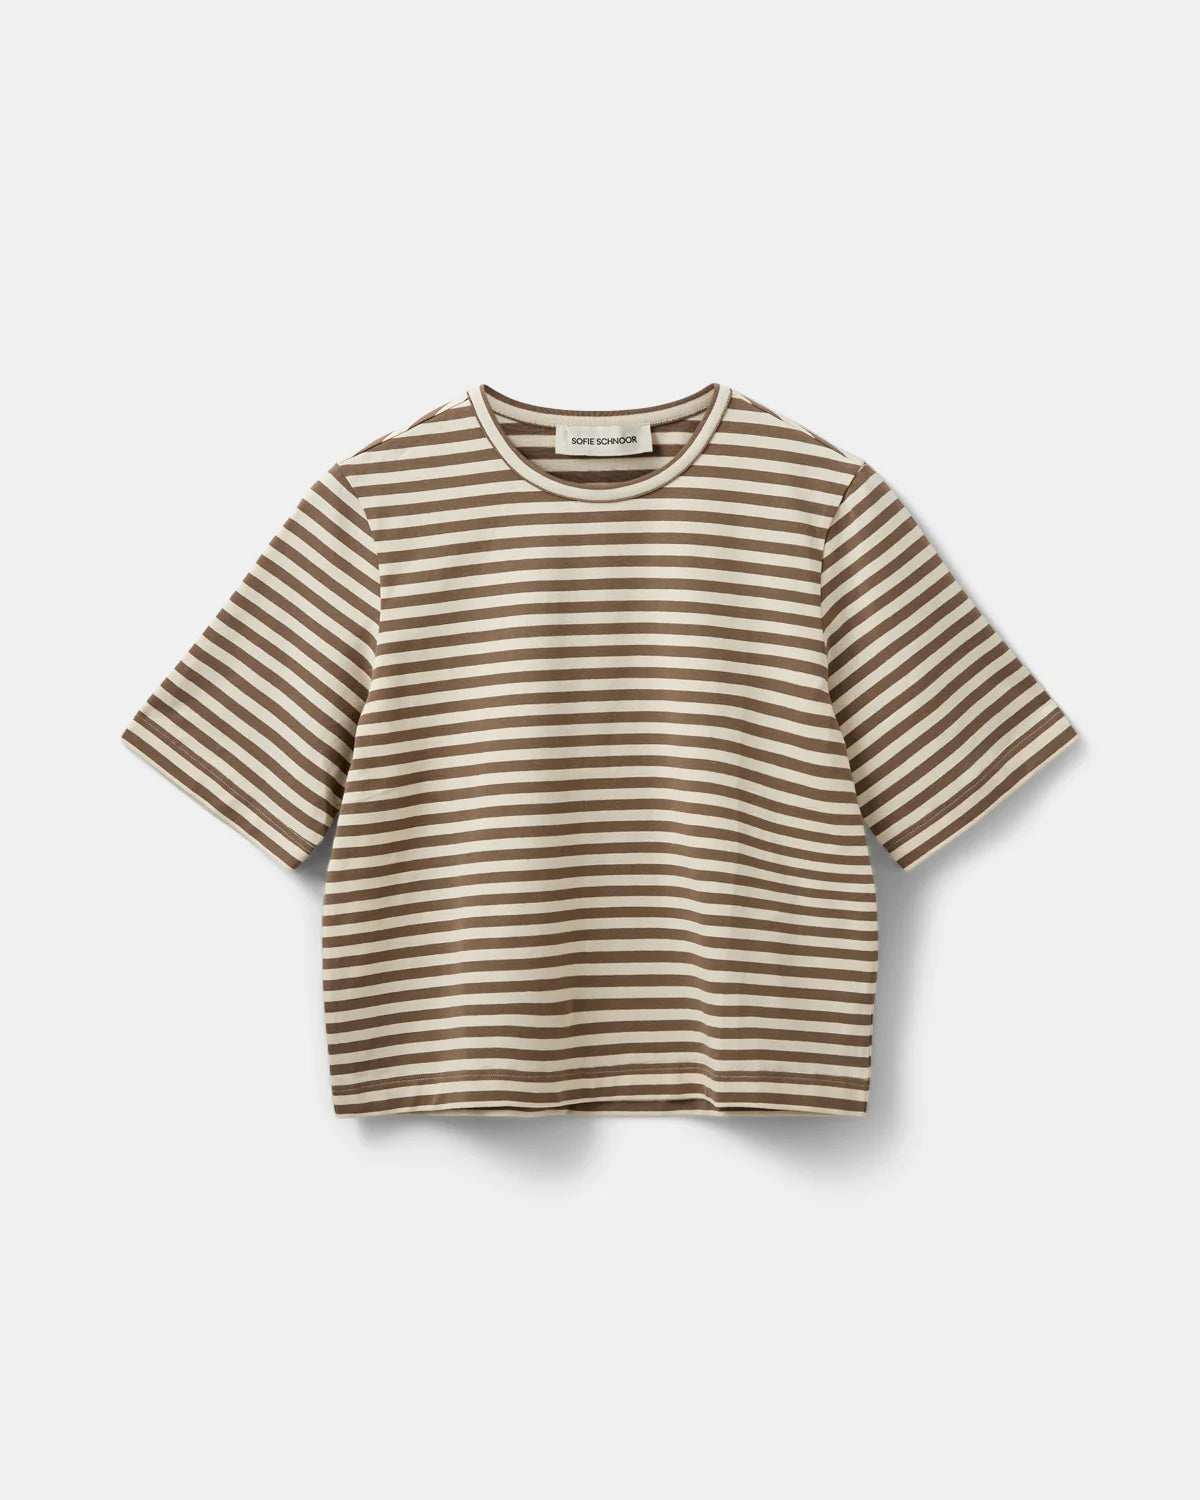 Sofie Schnoor T-shirt Light Brown Striped